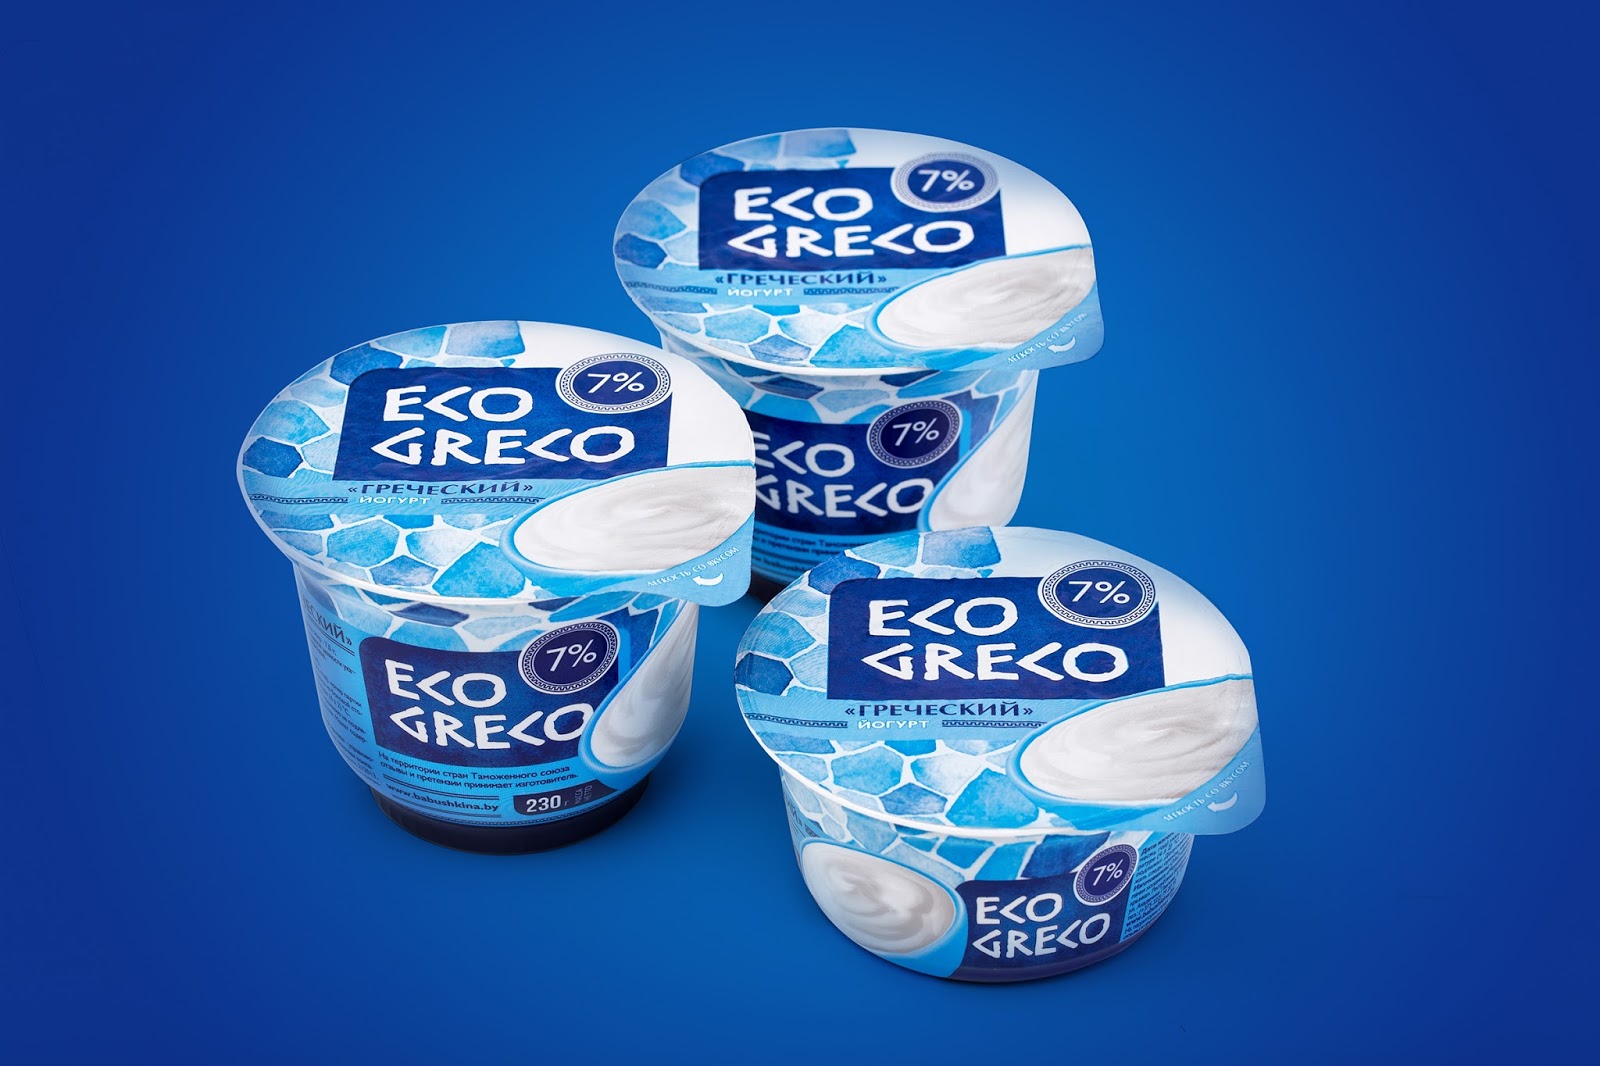 Greek yogurt. Йогурт. Йогурт греческий упаковка. Йогурт в упаковке. Необычная упаковка для йогурта.